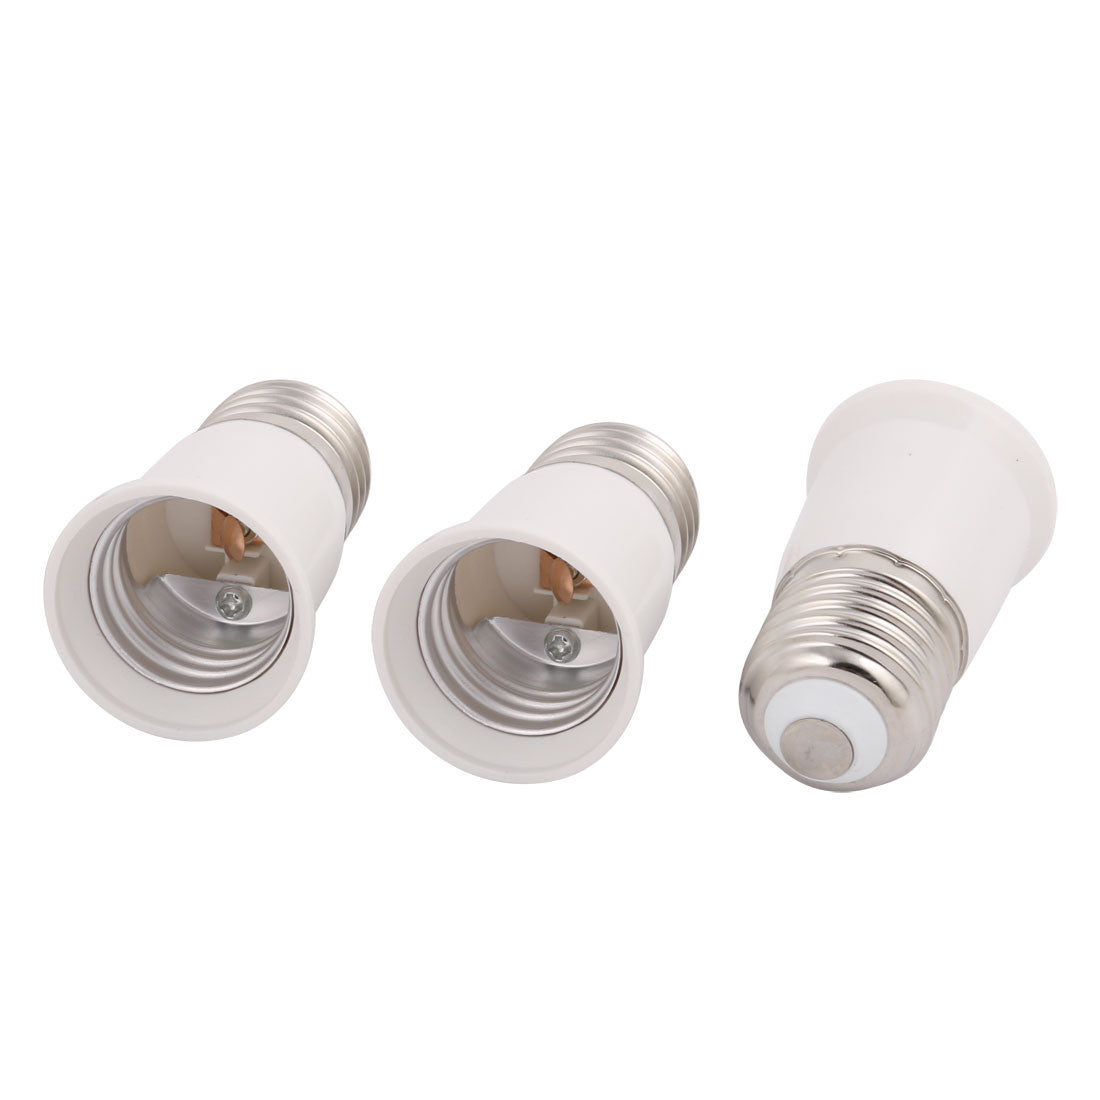 uxcell Uxcell 3Pcs E27 to E27 Extender Adapter Converter Lamp Bulb Socket Holder 65mm Height